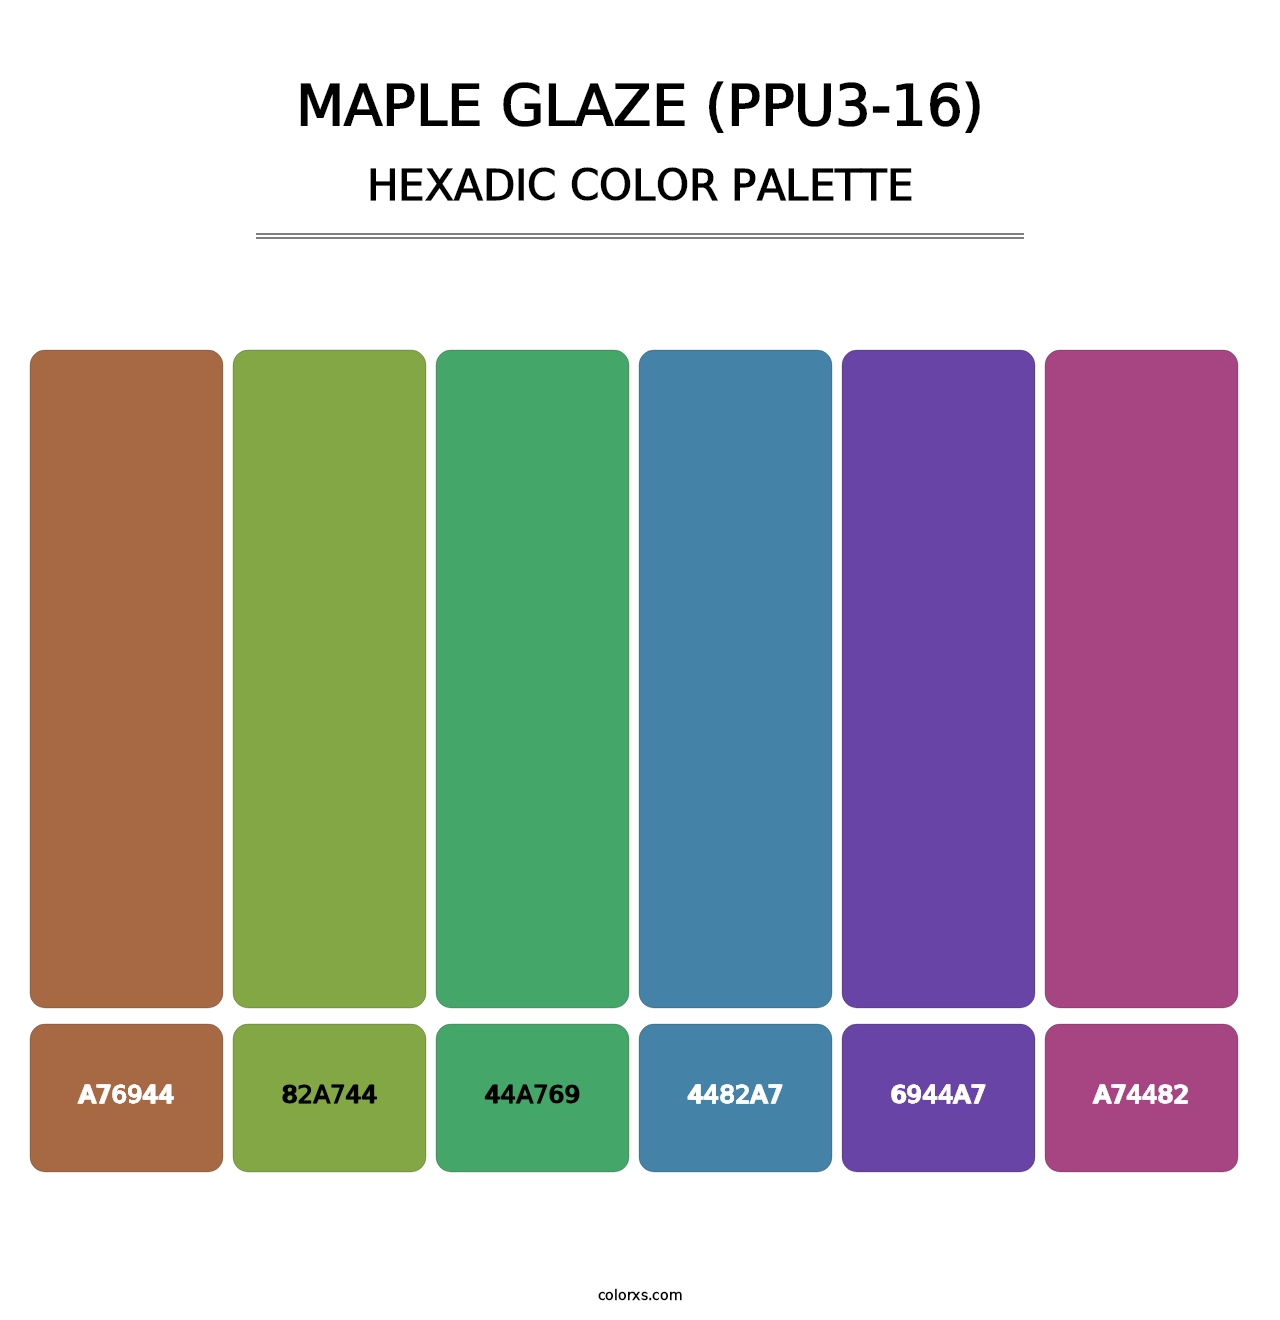 Maple Glaze (PPU3-16) - Hexadic Color Palette